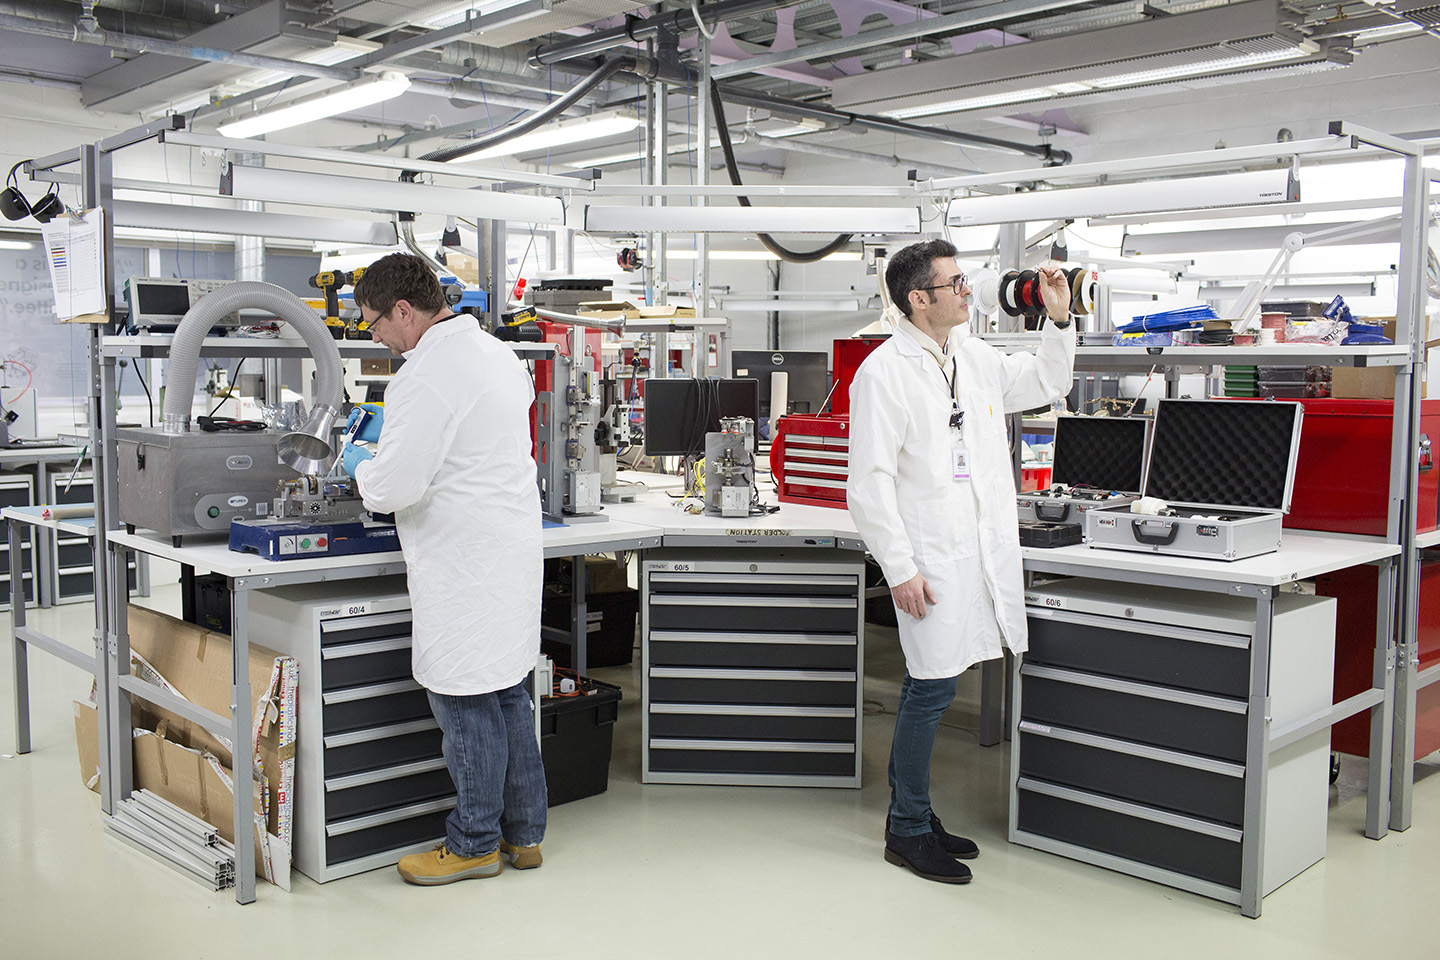   The motors build lab at Dyson headquarters.&nbsp;  